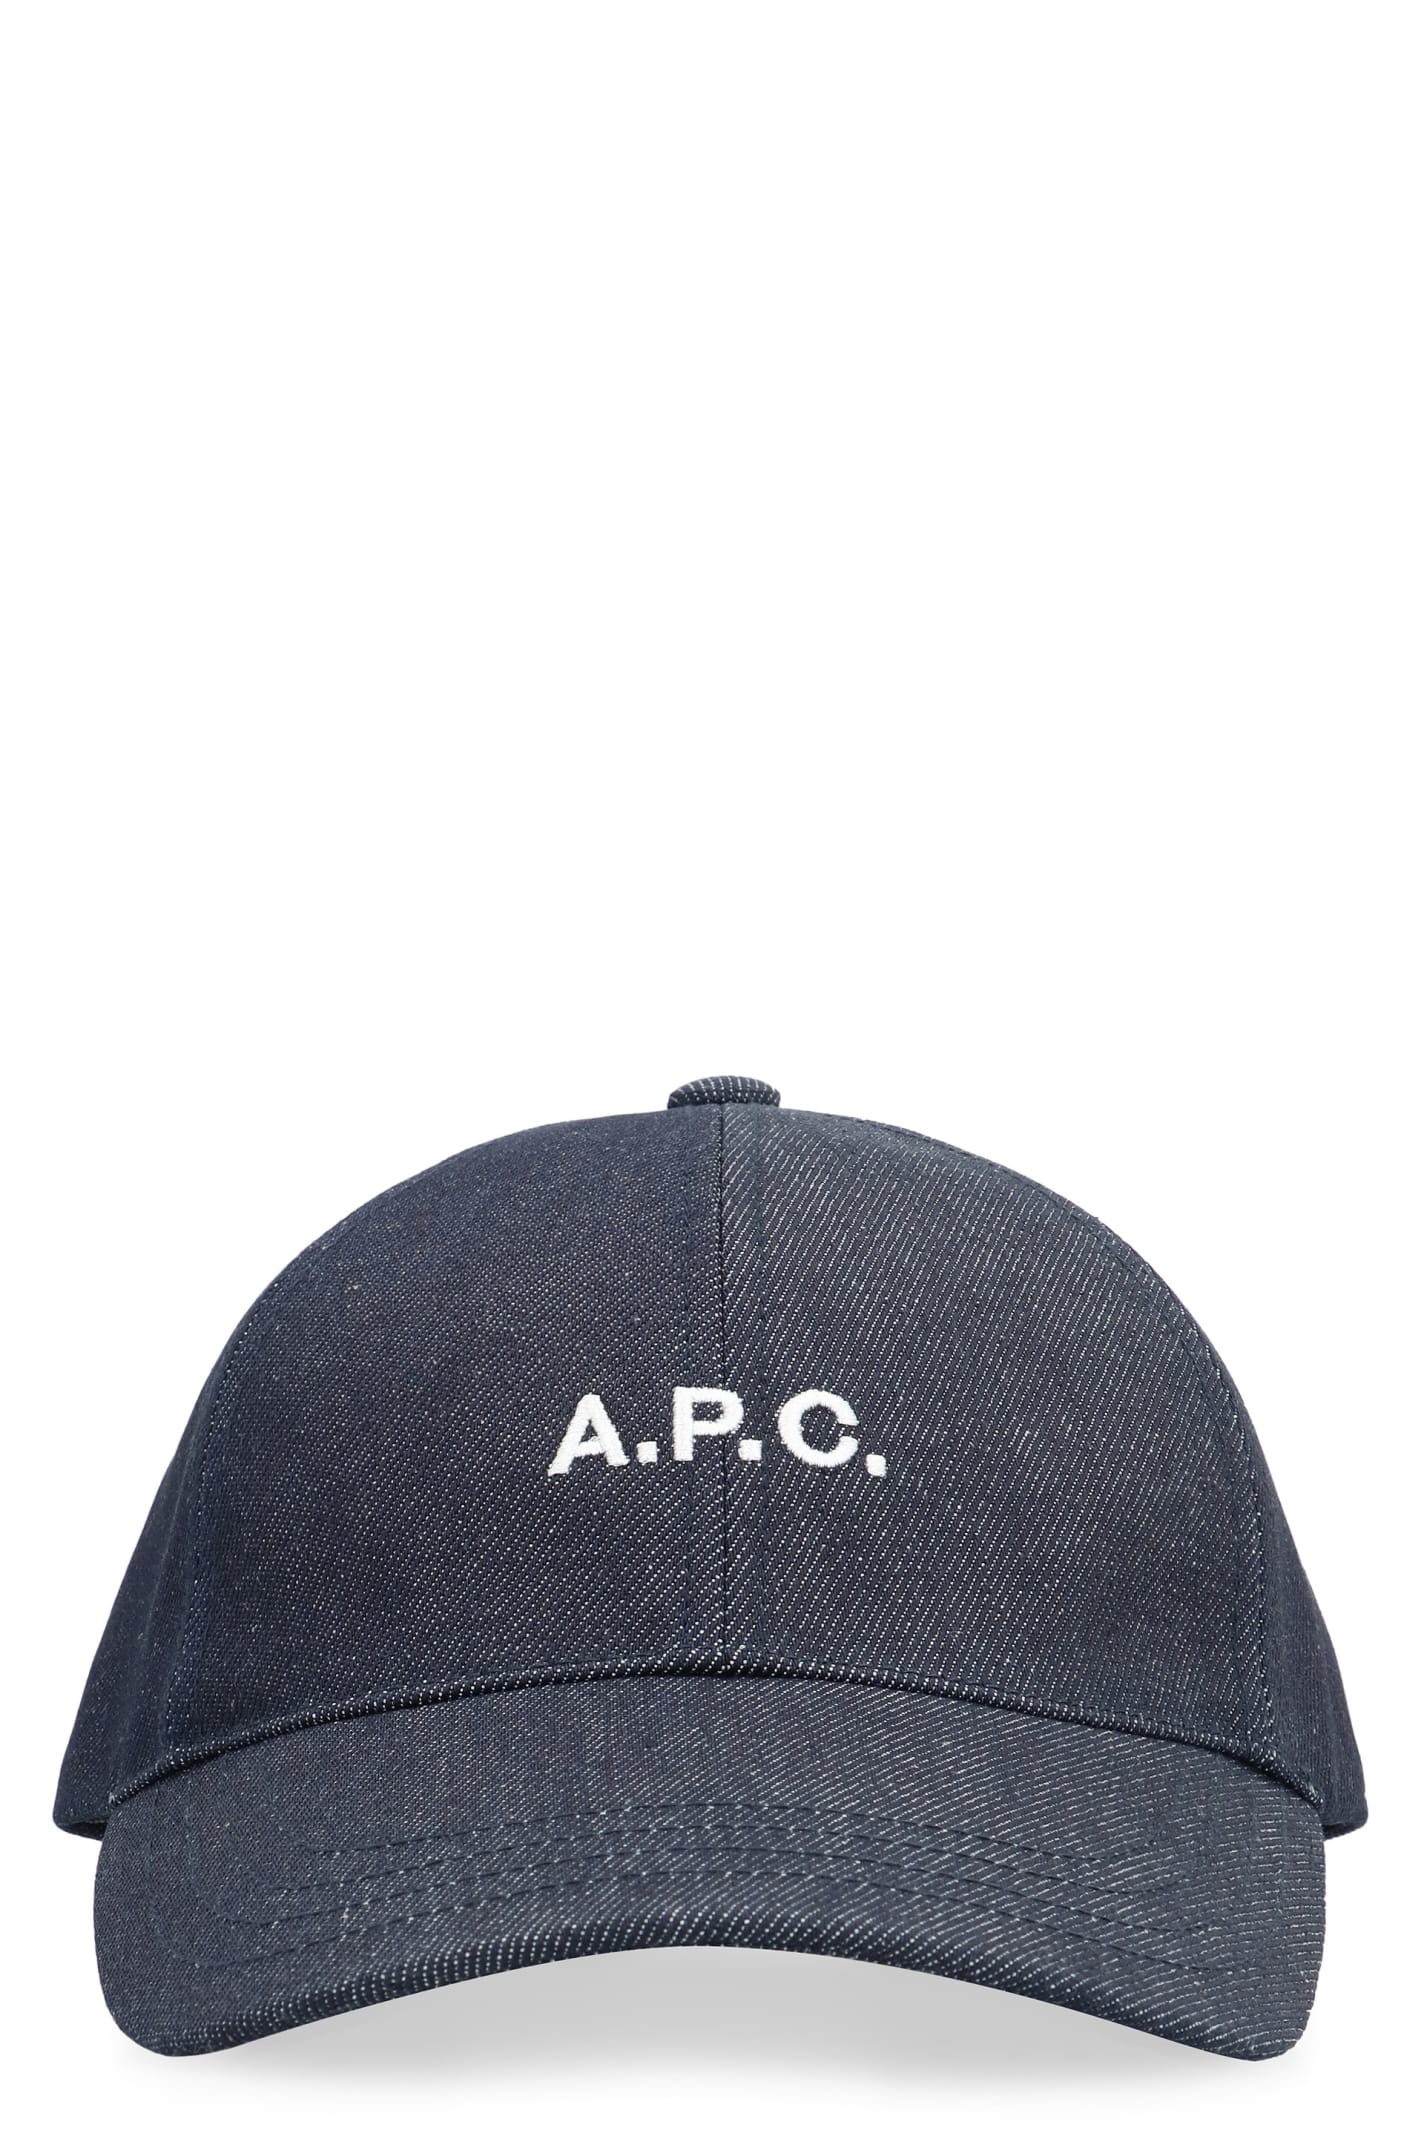 APC LOGO BASEBALL CAP